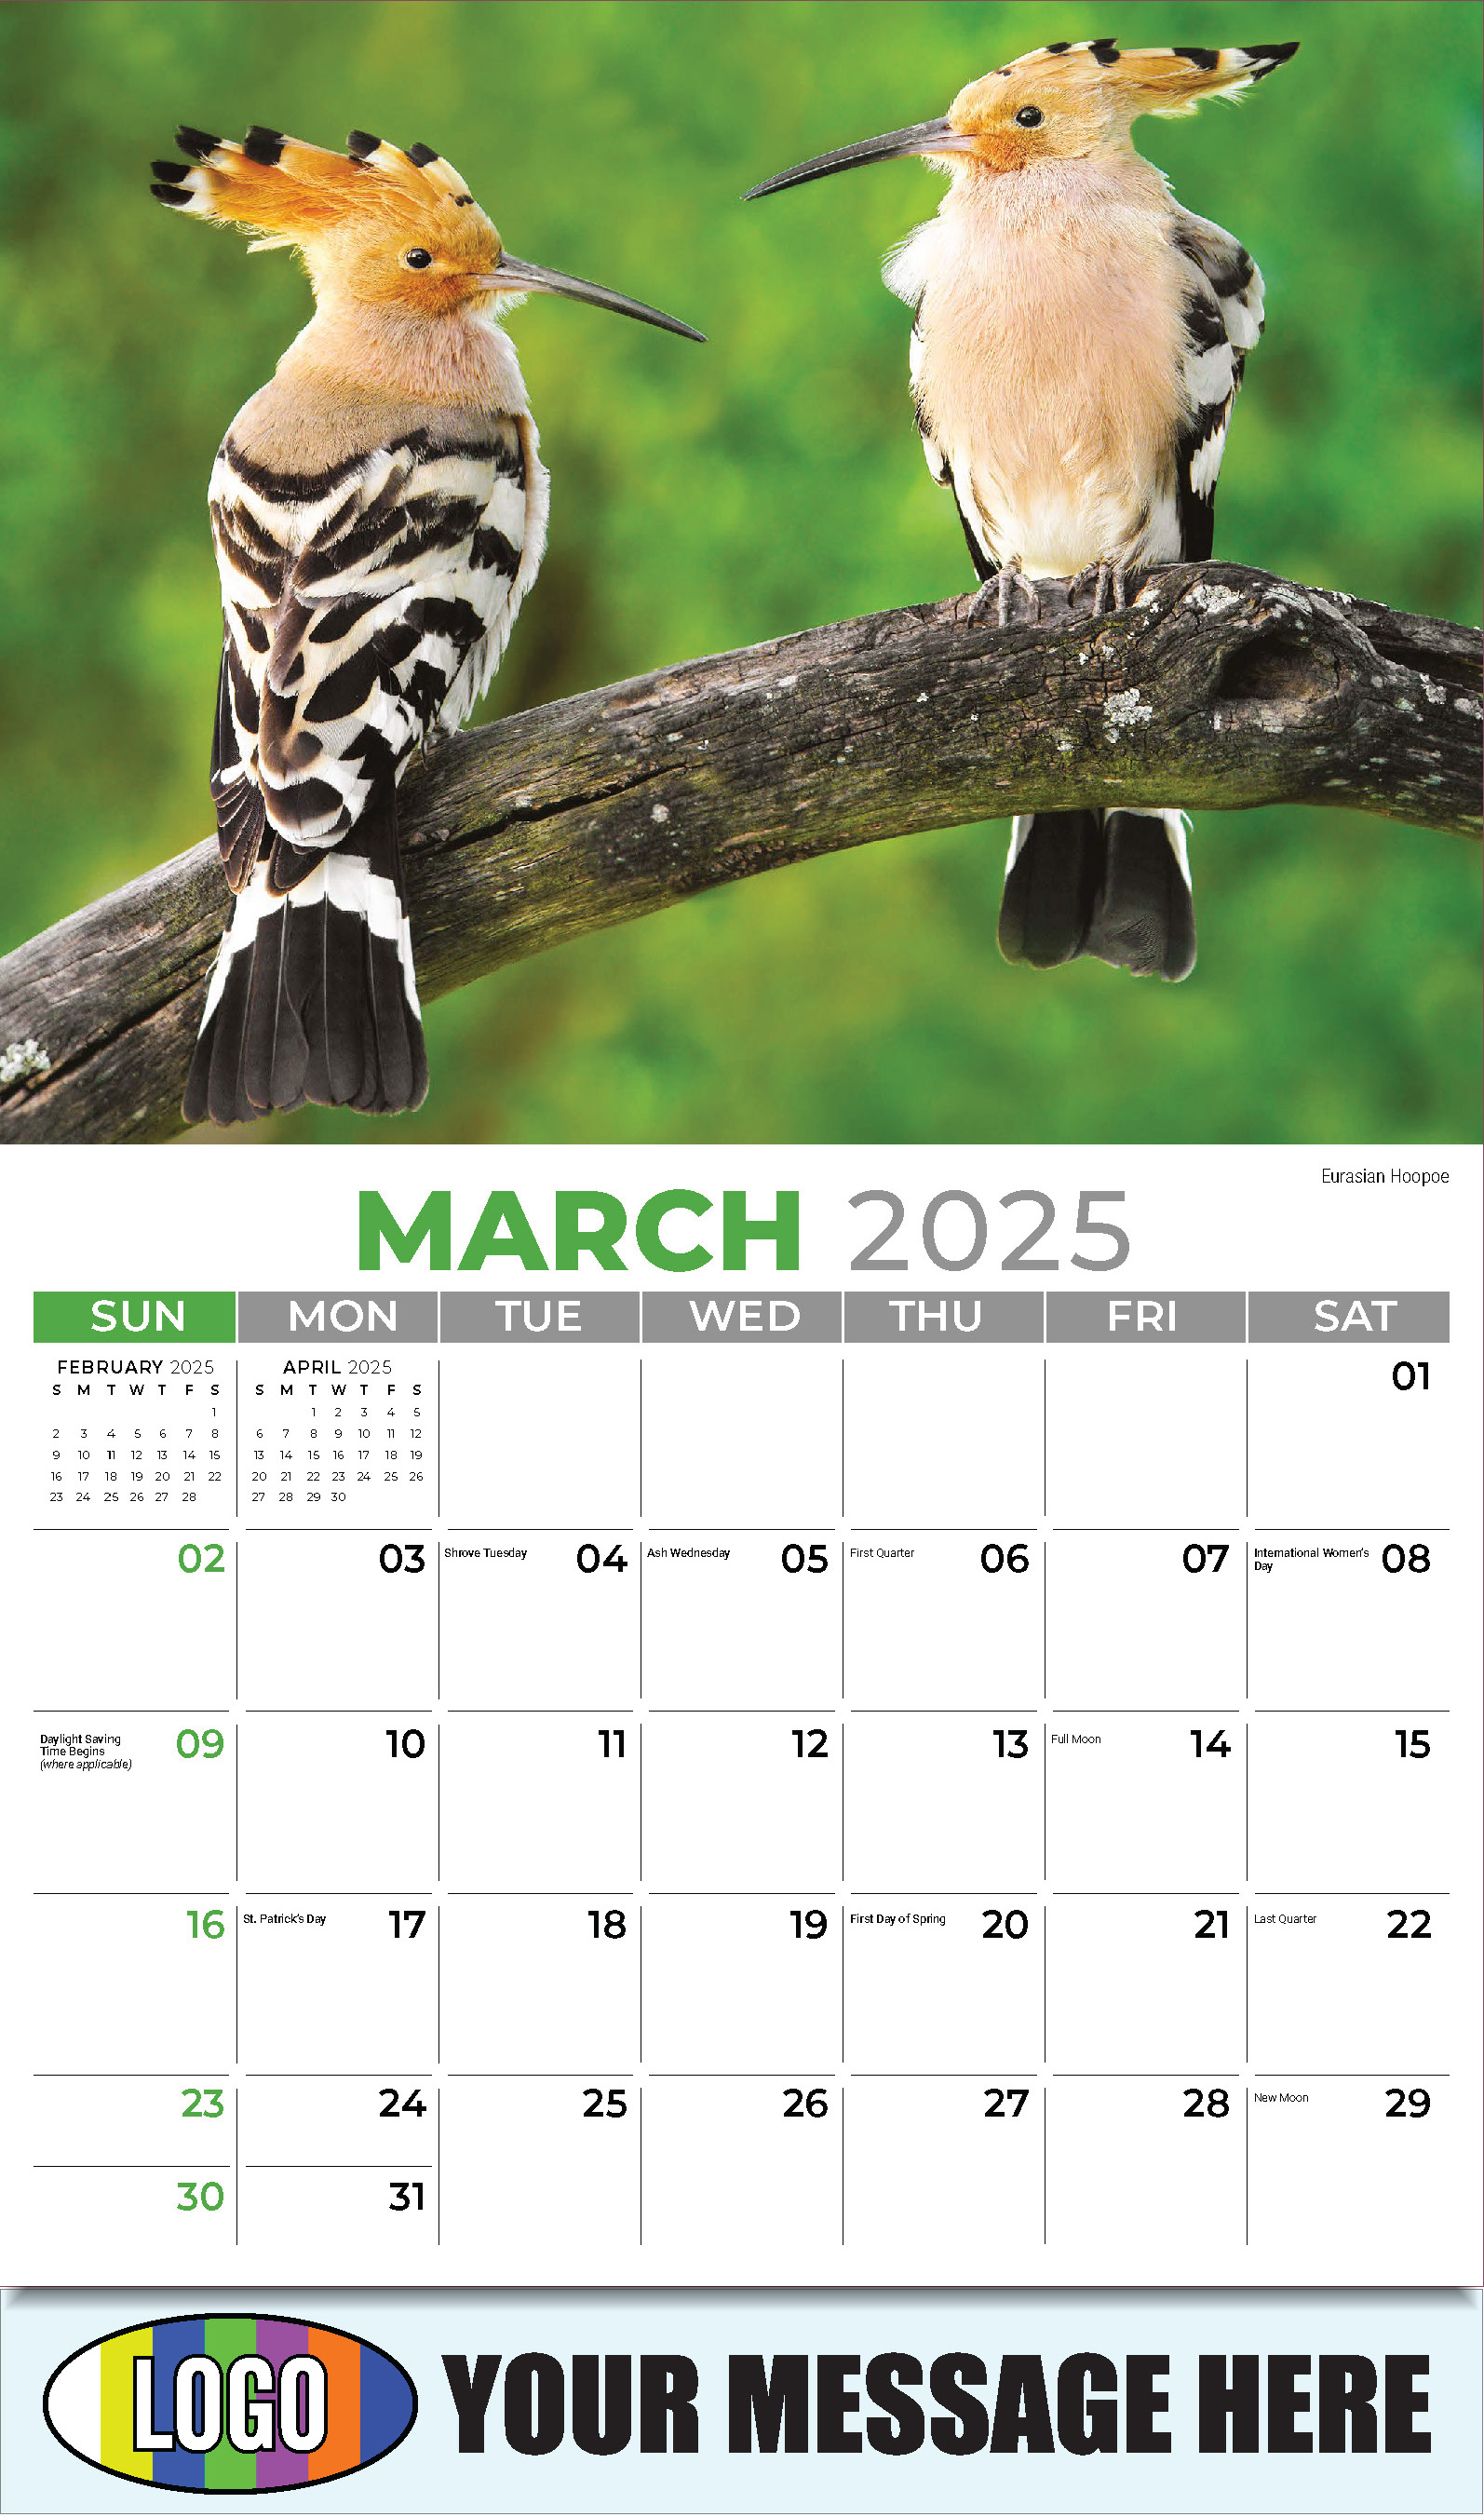 International Wildlife 2025 Business Advertising Wall Calendar - March